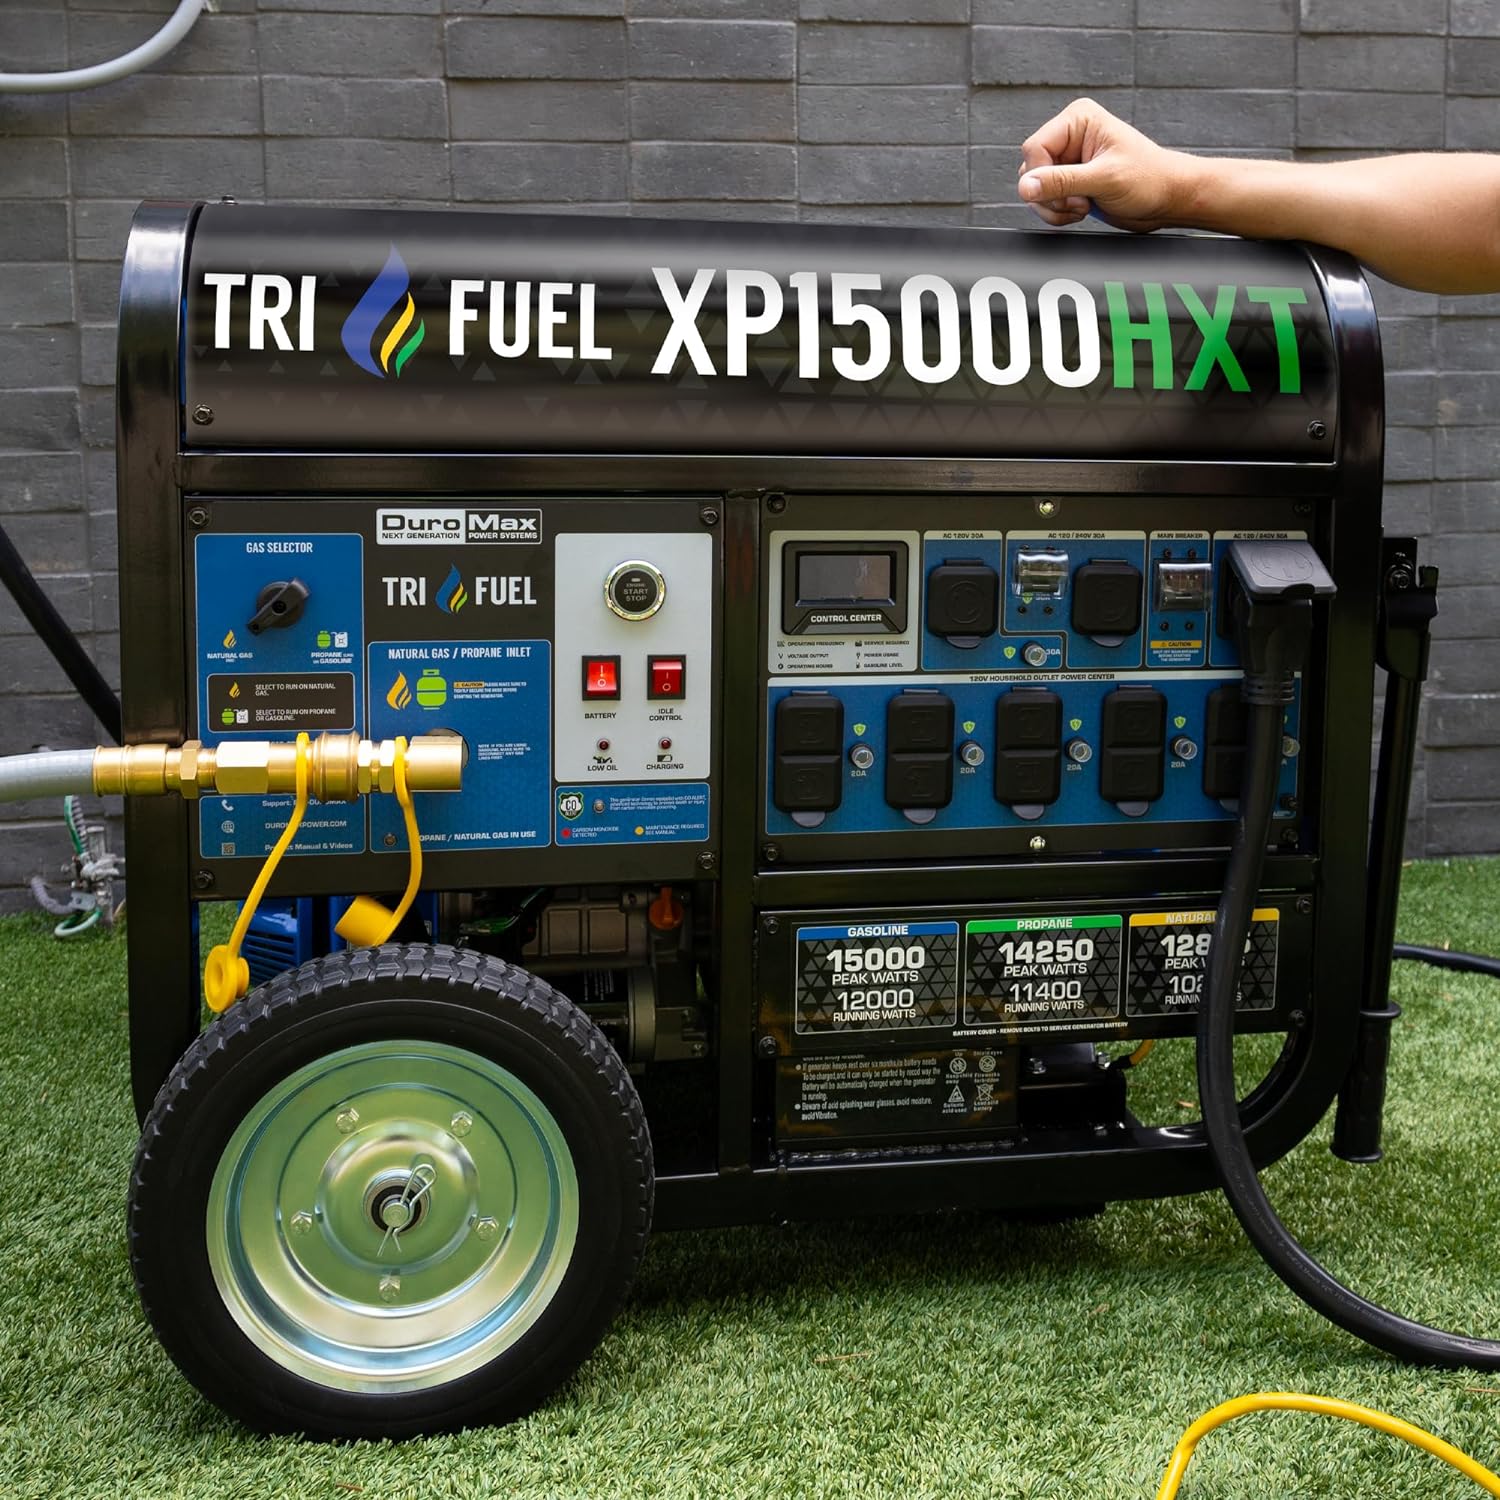 DuroMax XP13000HXT 13,000-Watt 500cc Tri Fuel Gas Propane Natural Gas Portable Generator with CO Alert, Black/Blue - DuroMax XP13000HXT Portable Generator Review